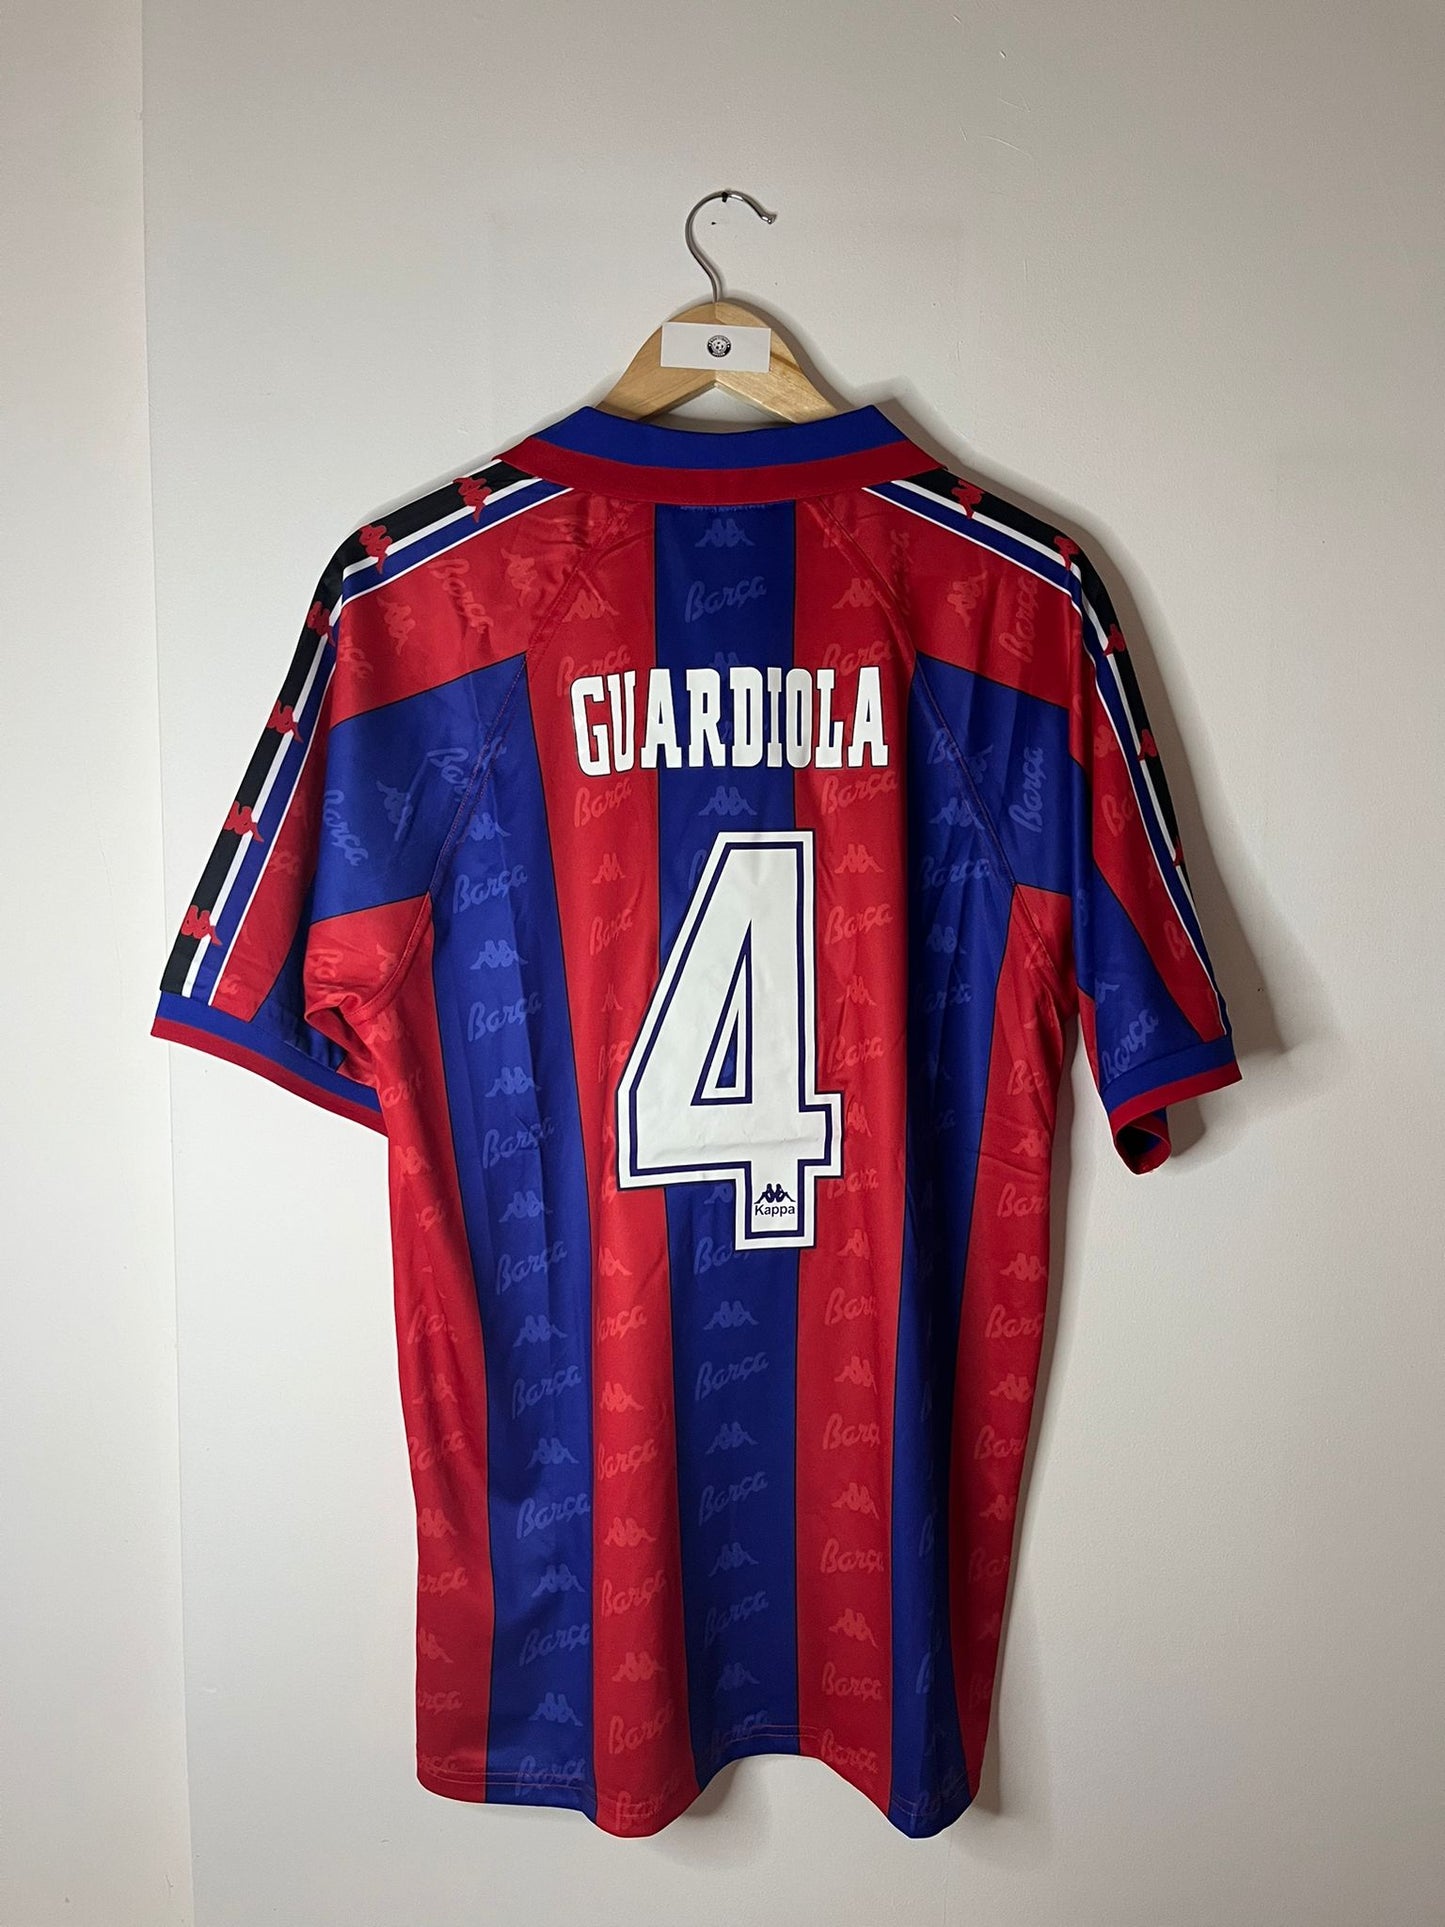 Guardiola shirt Barça